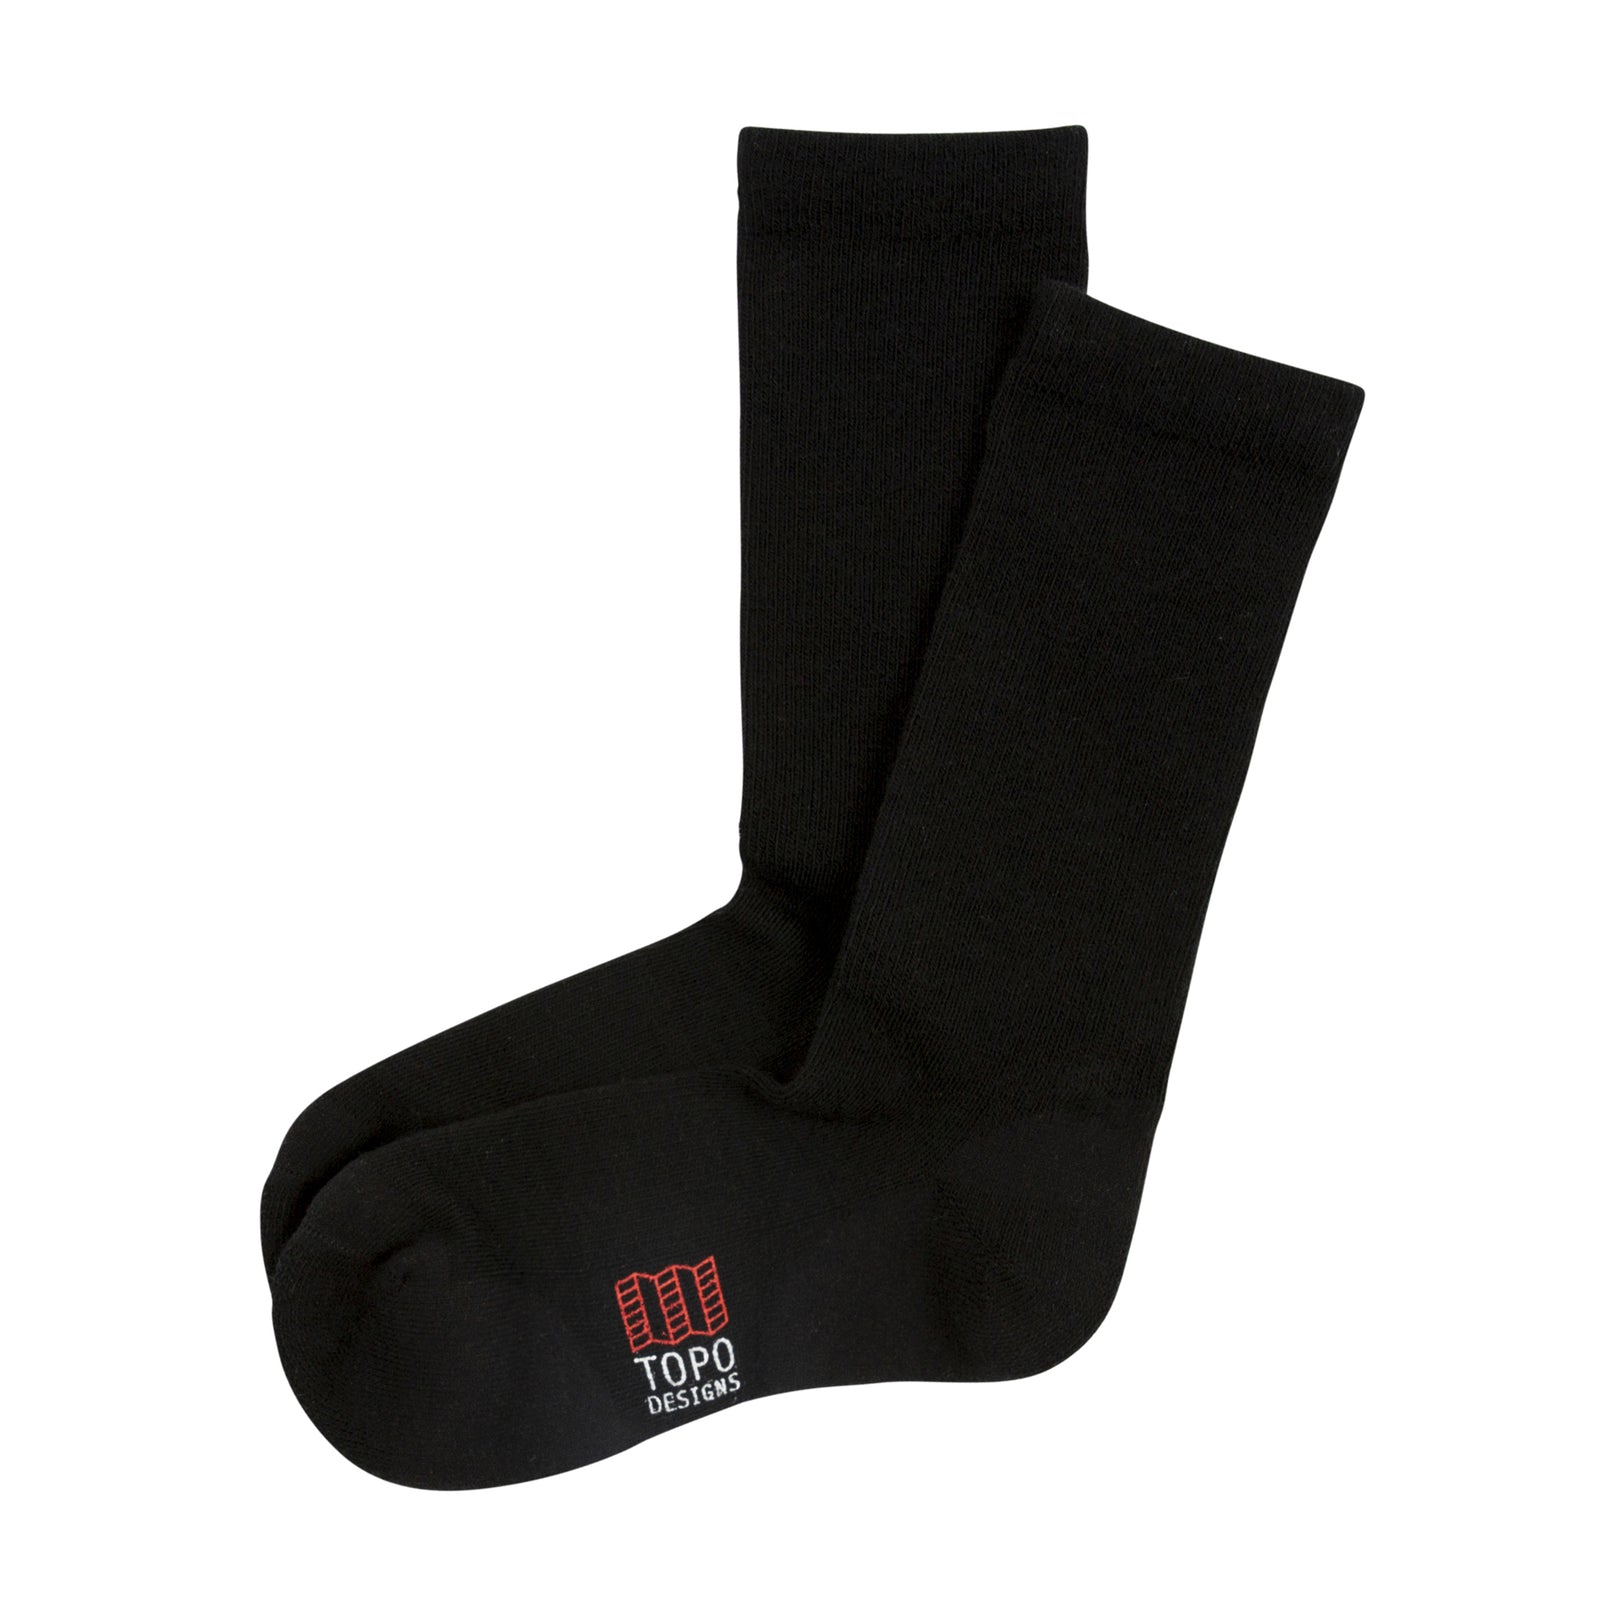 Product shot of Topo Designs Town Socks in "Black".